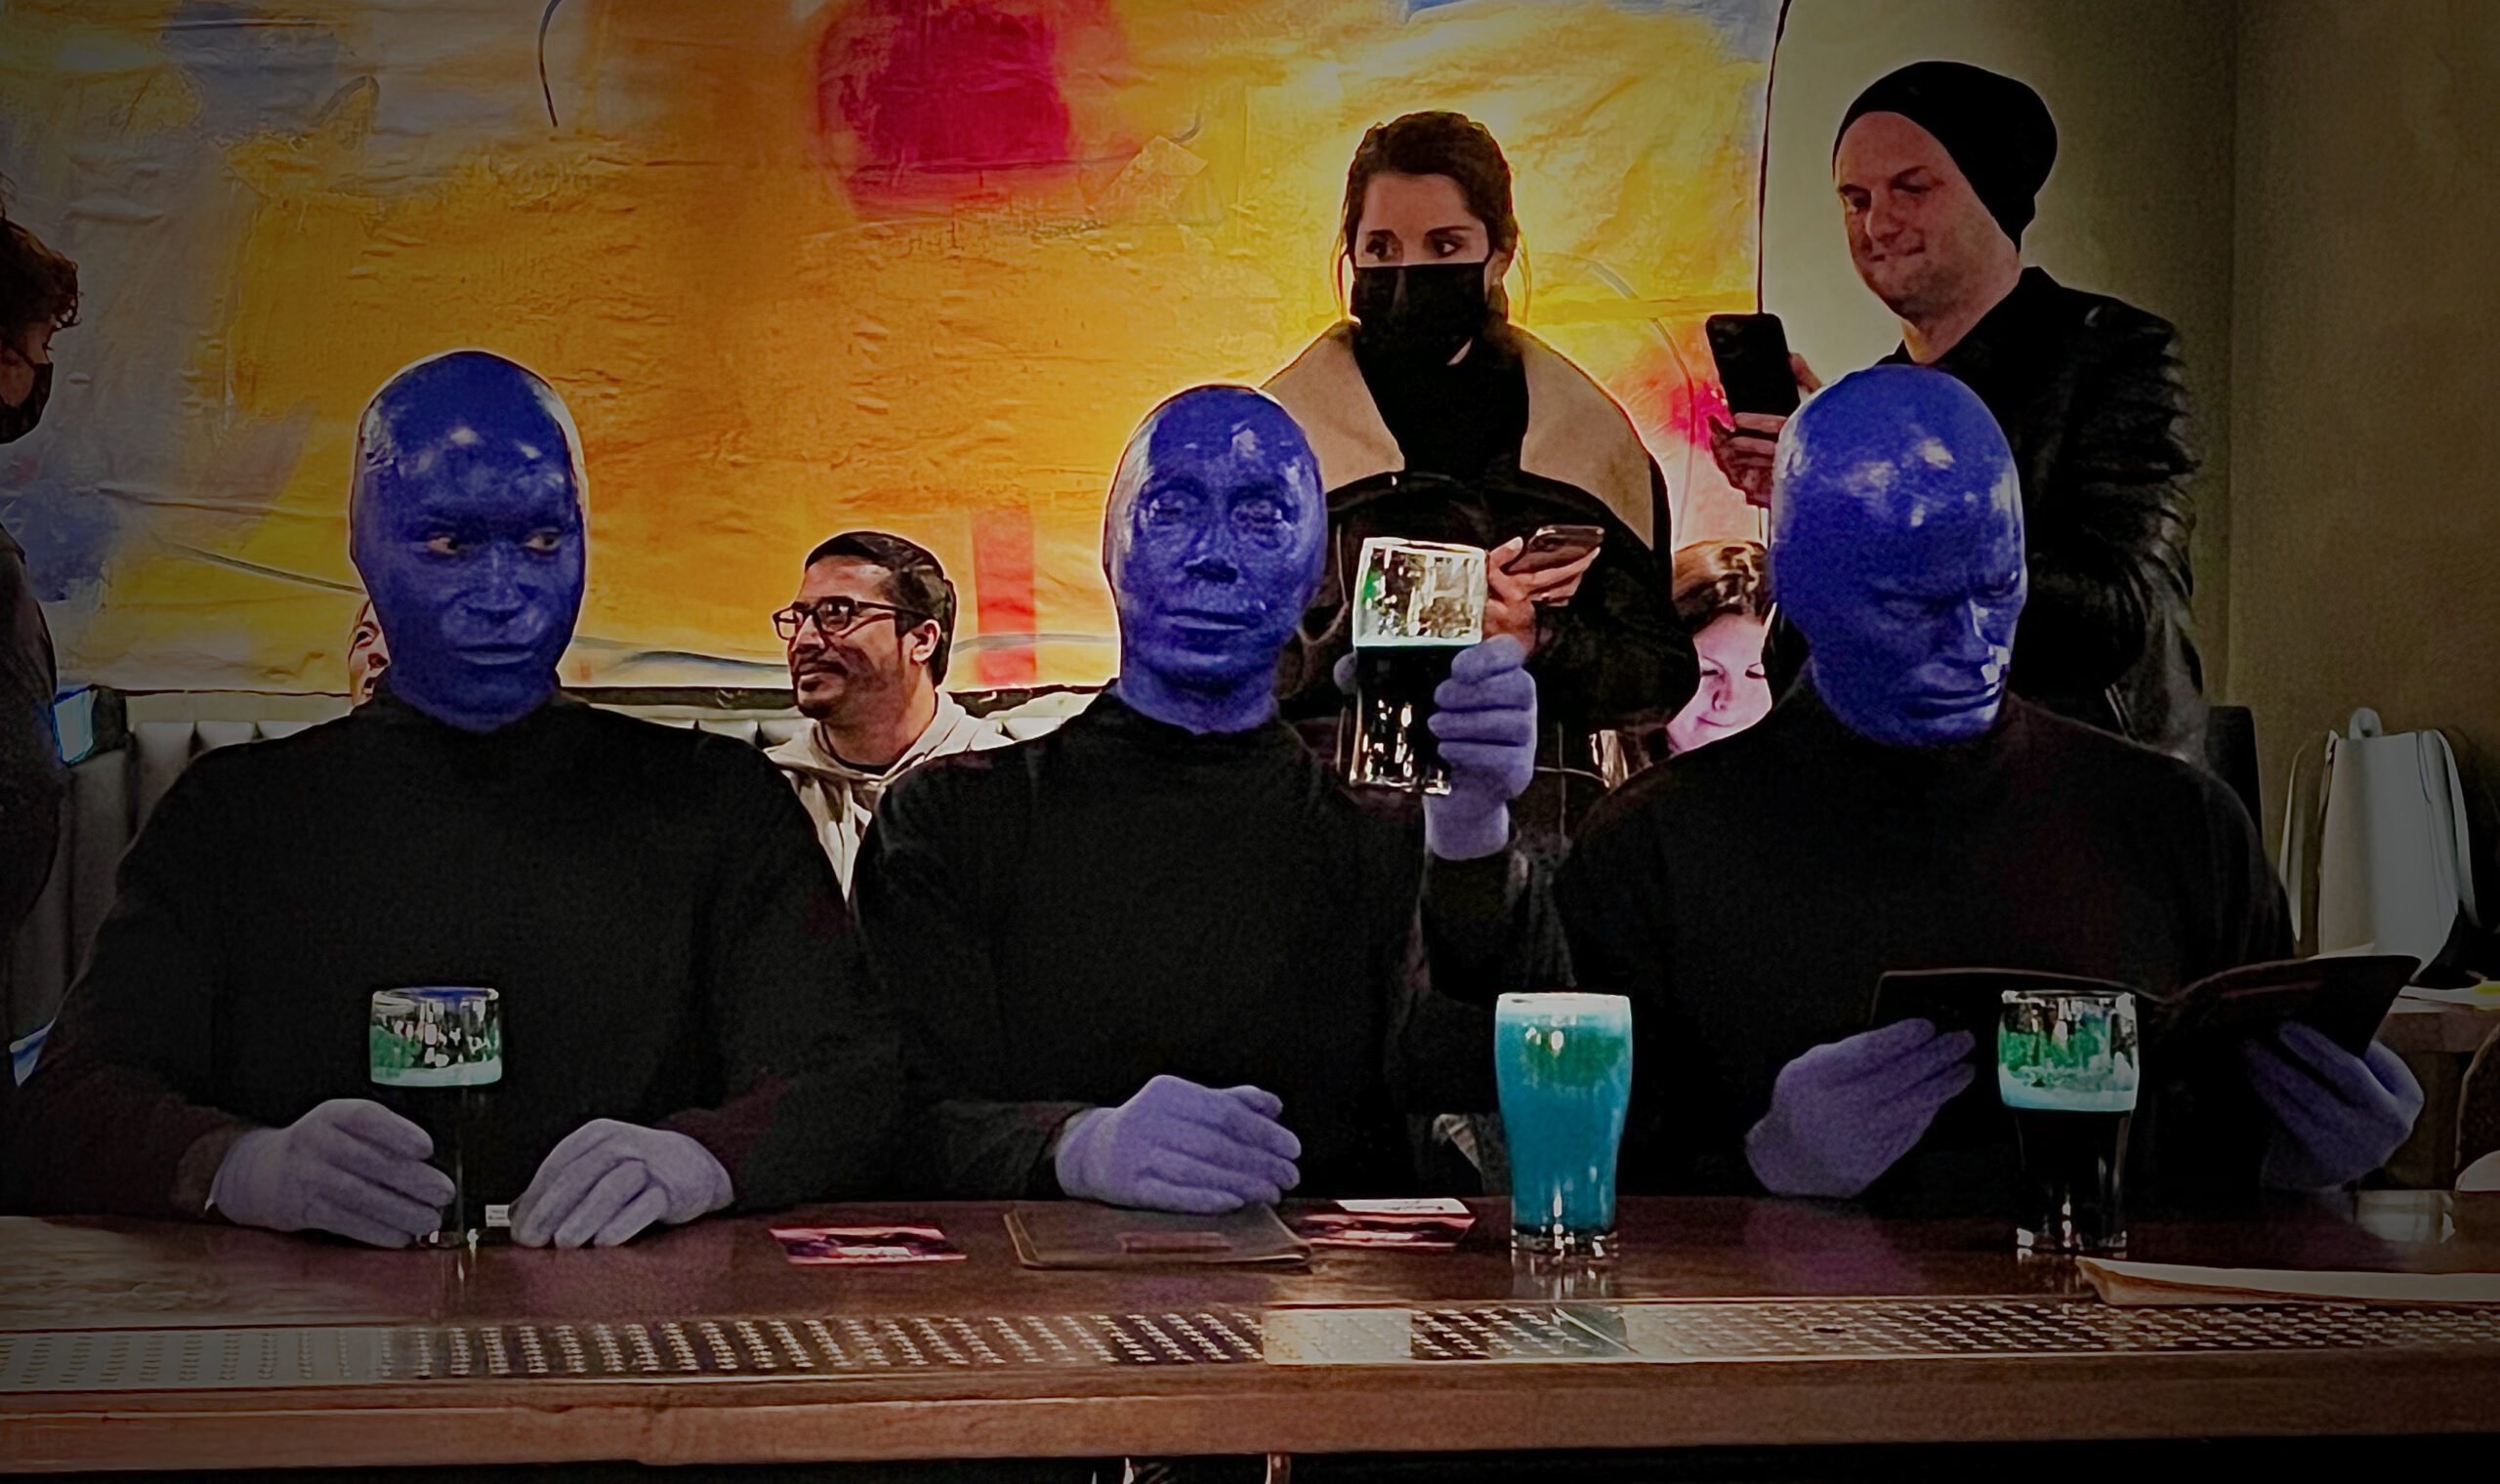 Happy 20th Anniversary, Blue Man Group!  Blue man group, Blue man, Feeling  blue